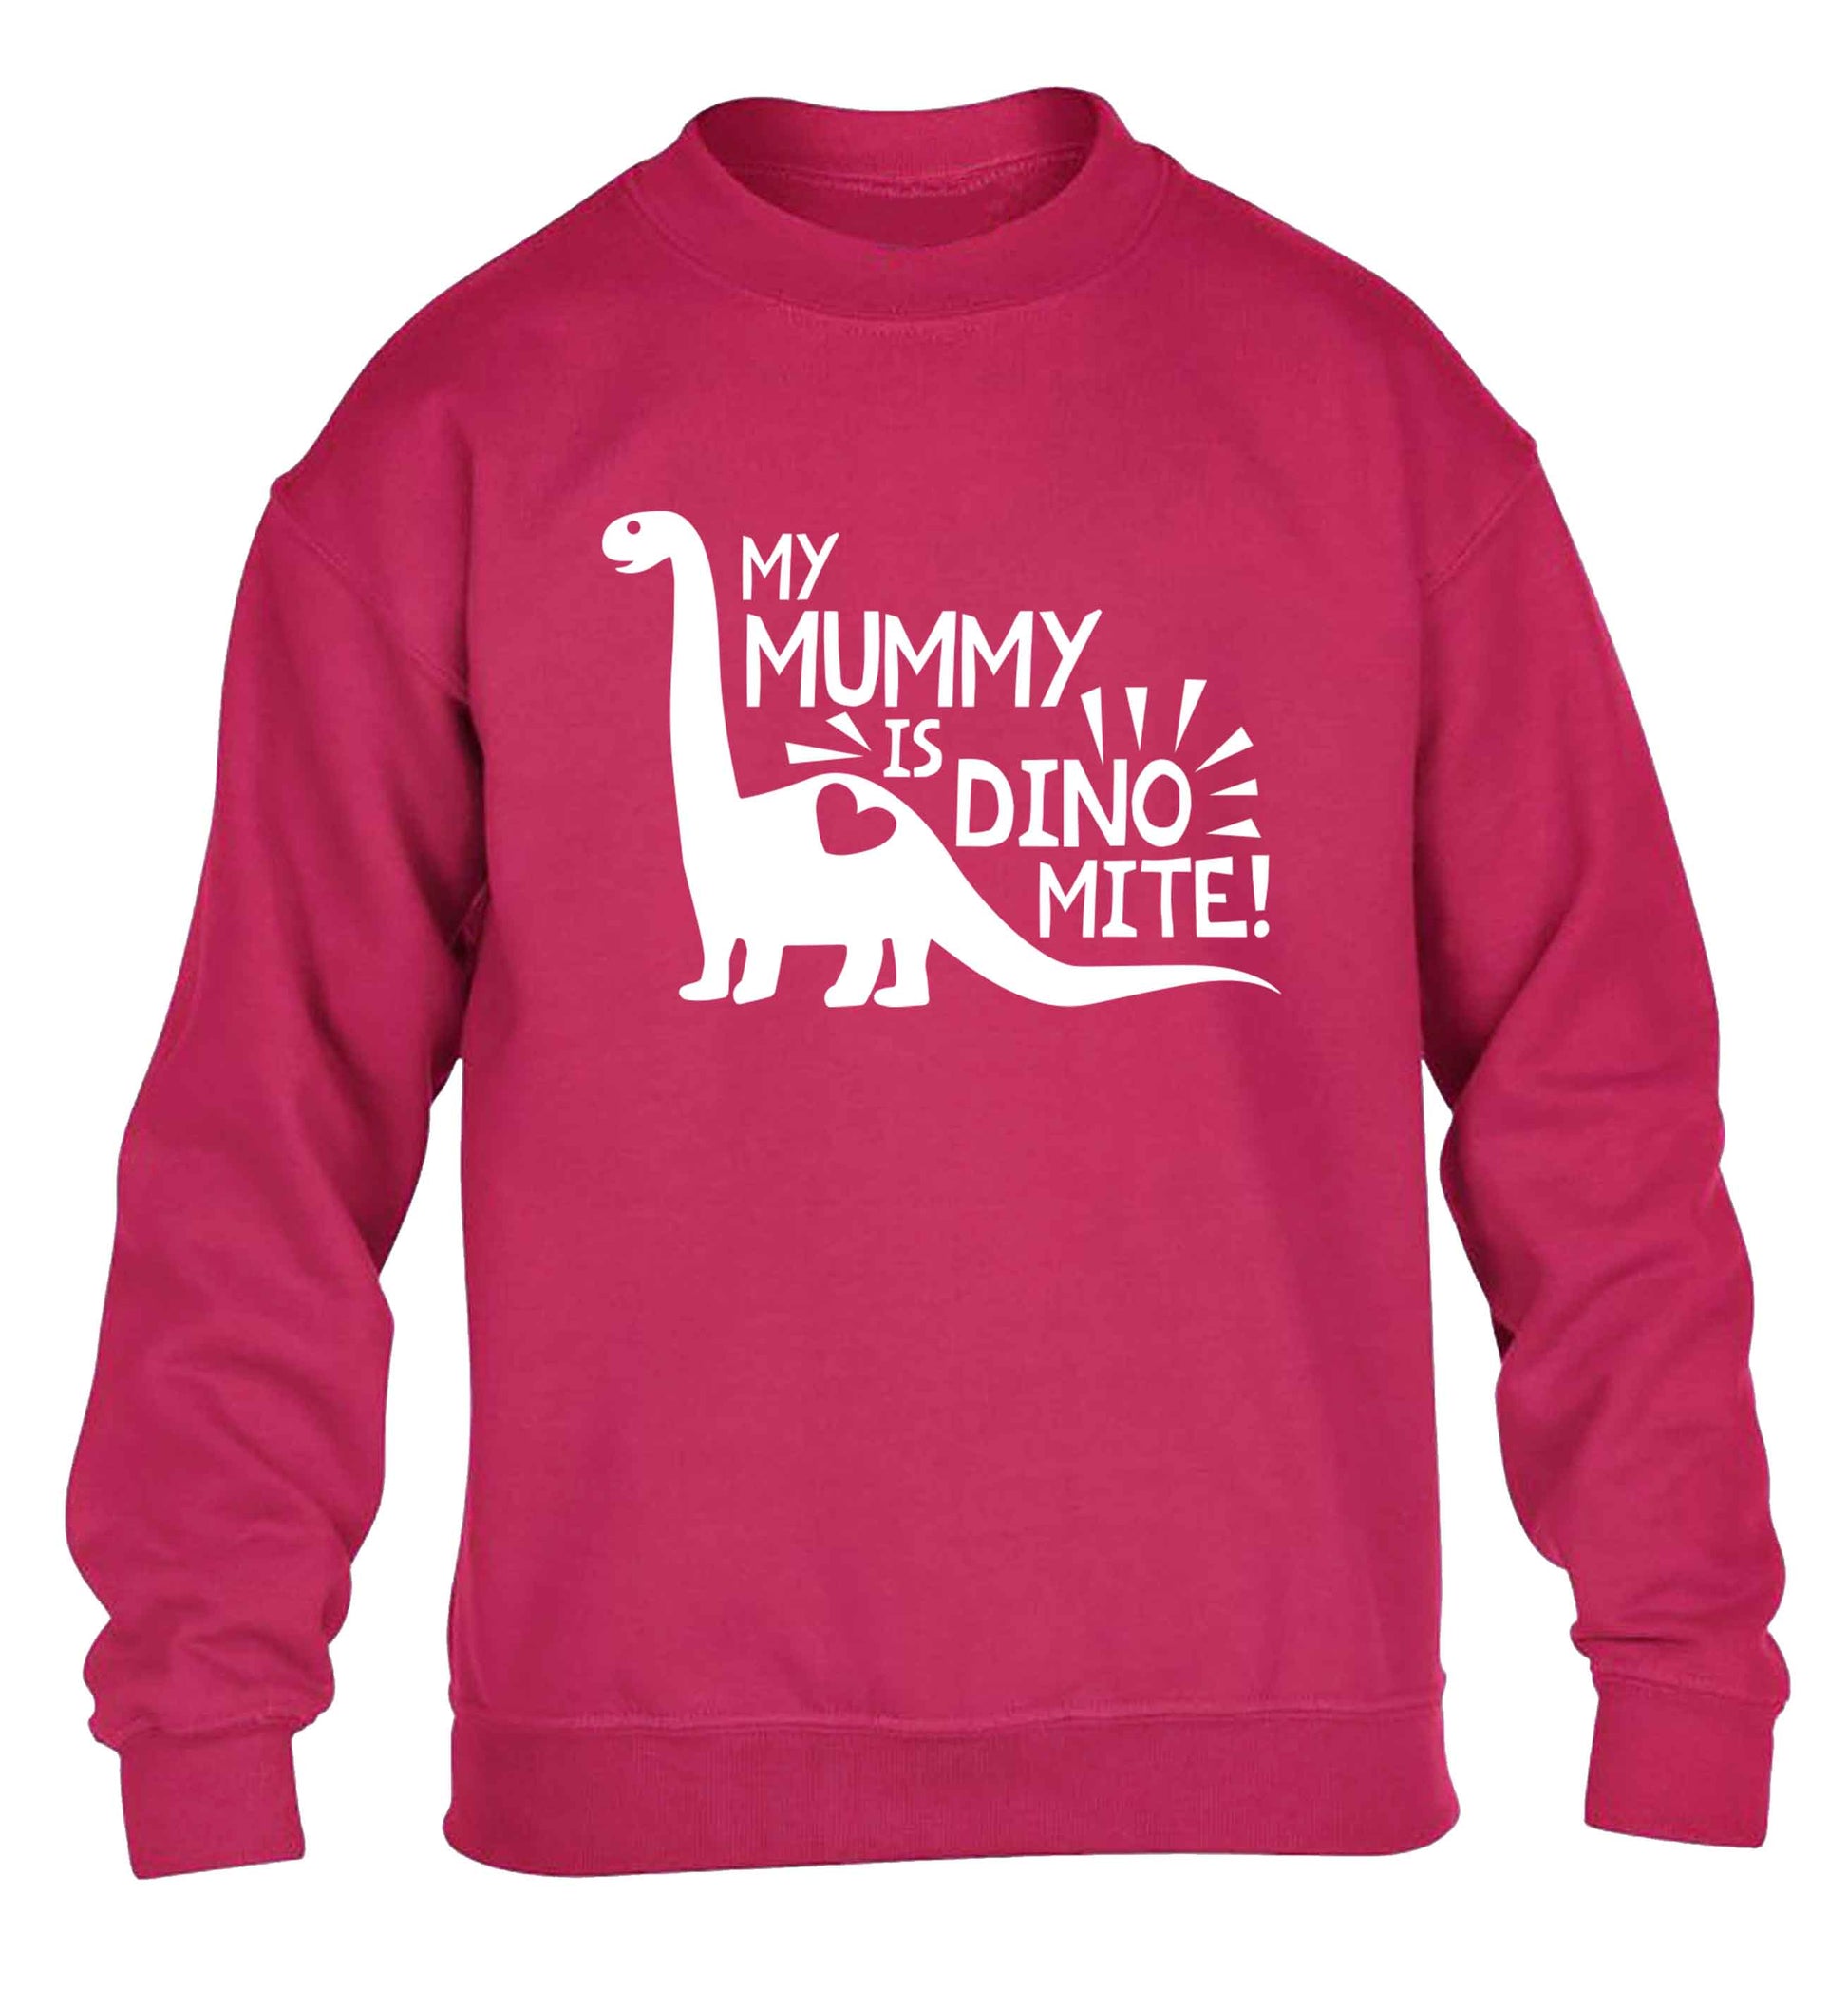 My mummy is dinomite children's pink sweater 12-13 Years